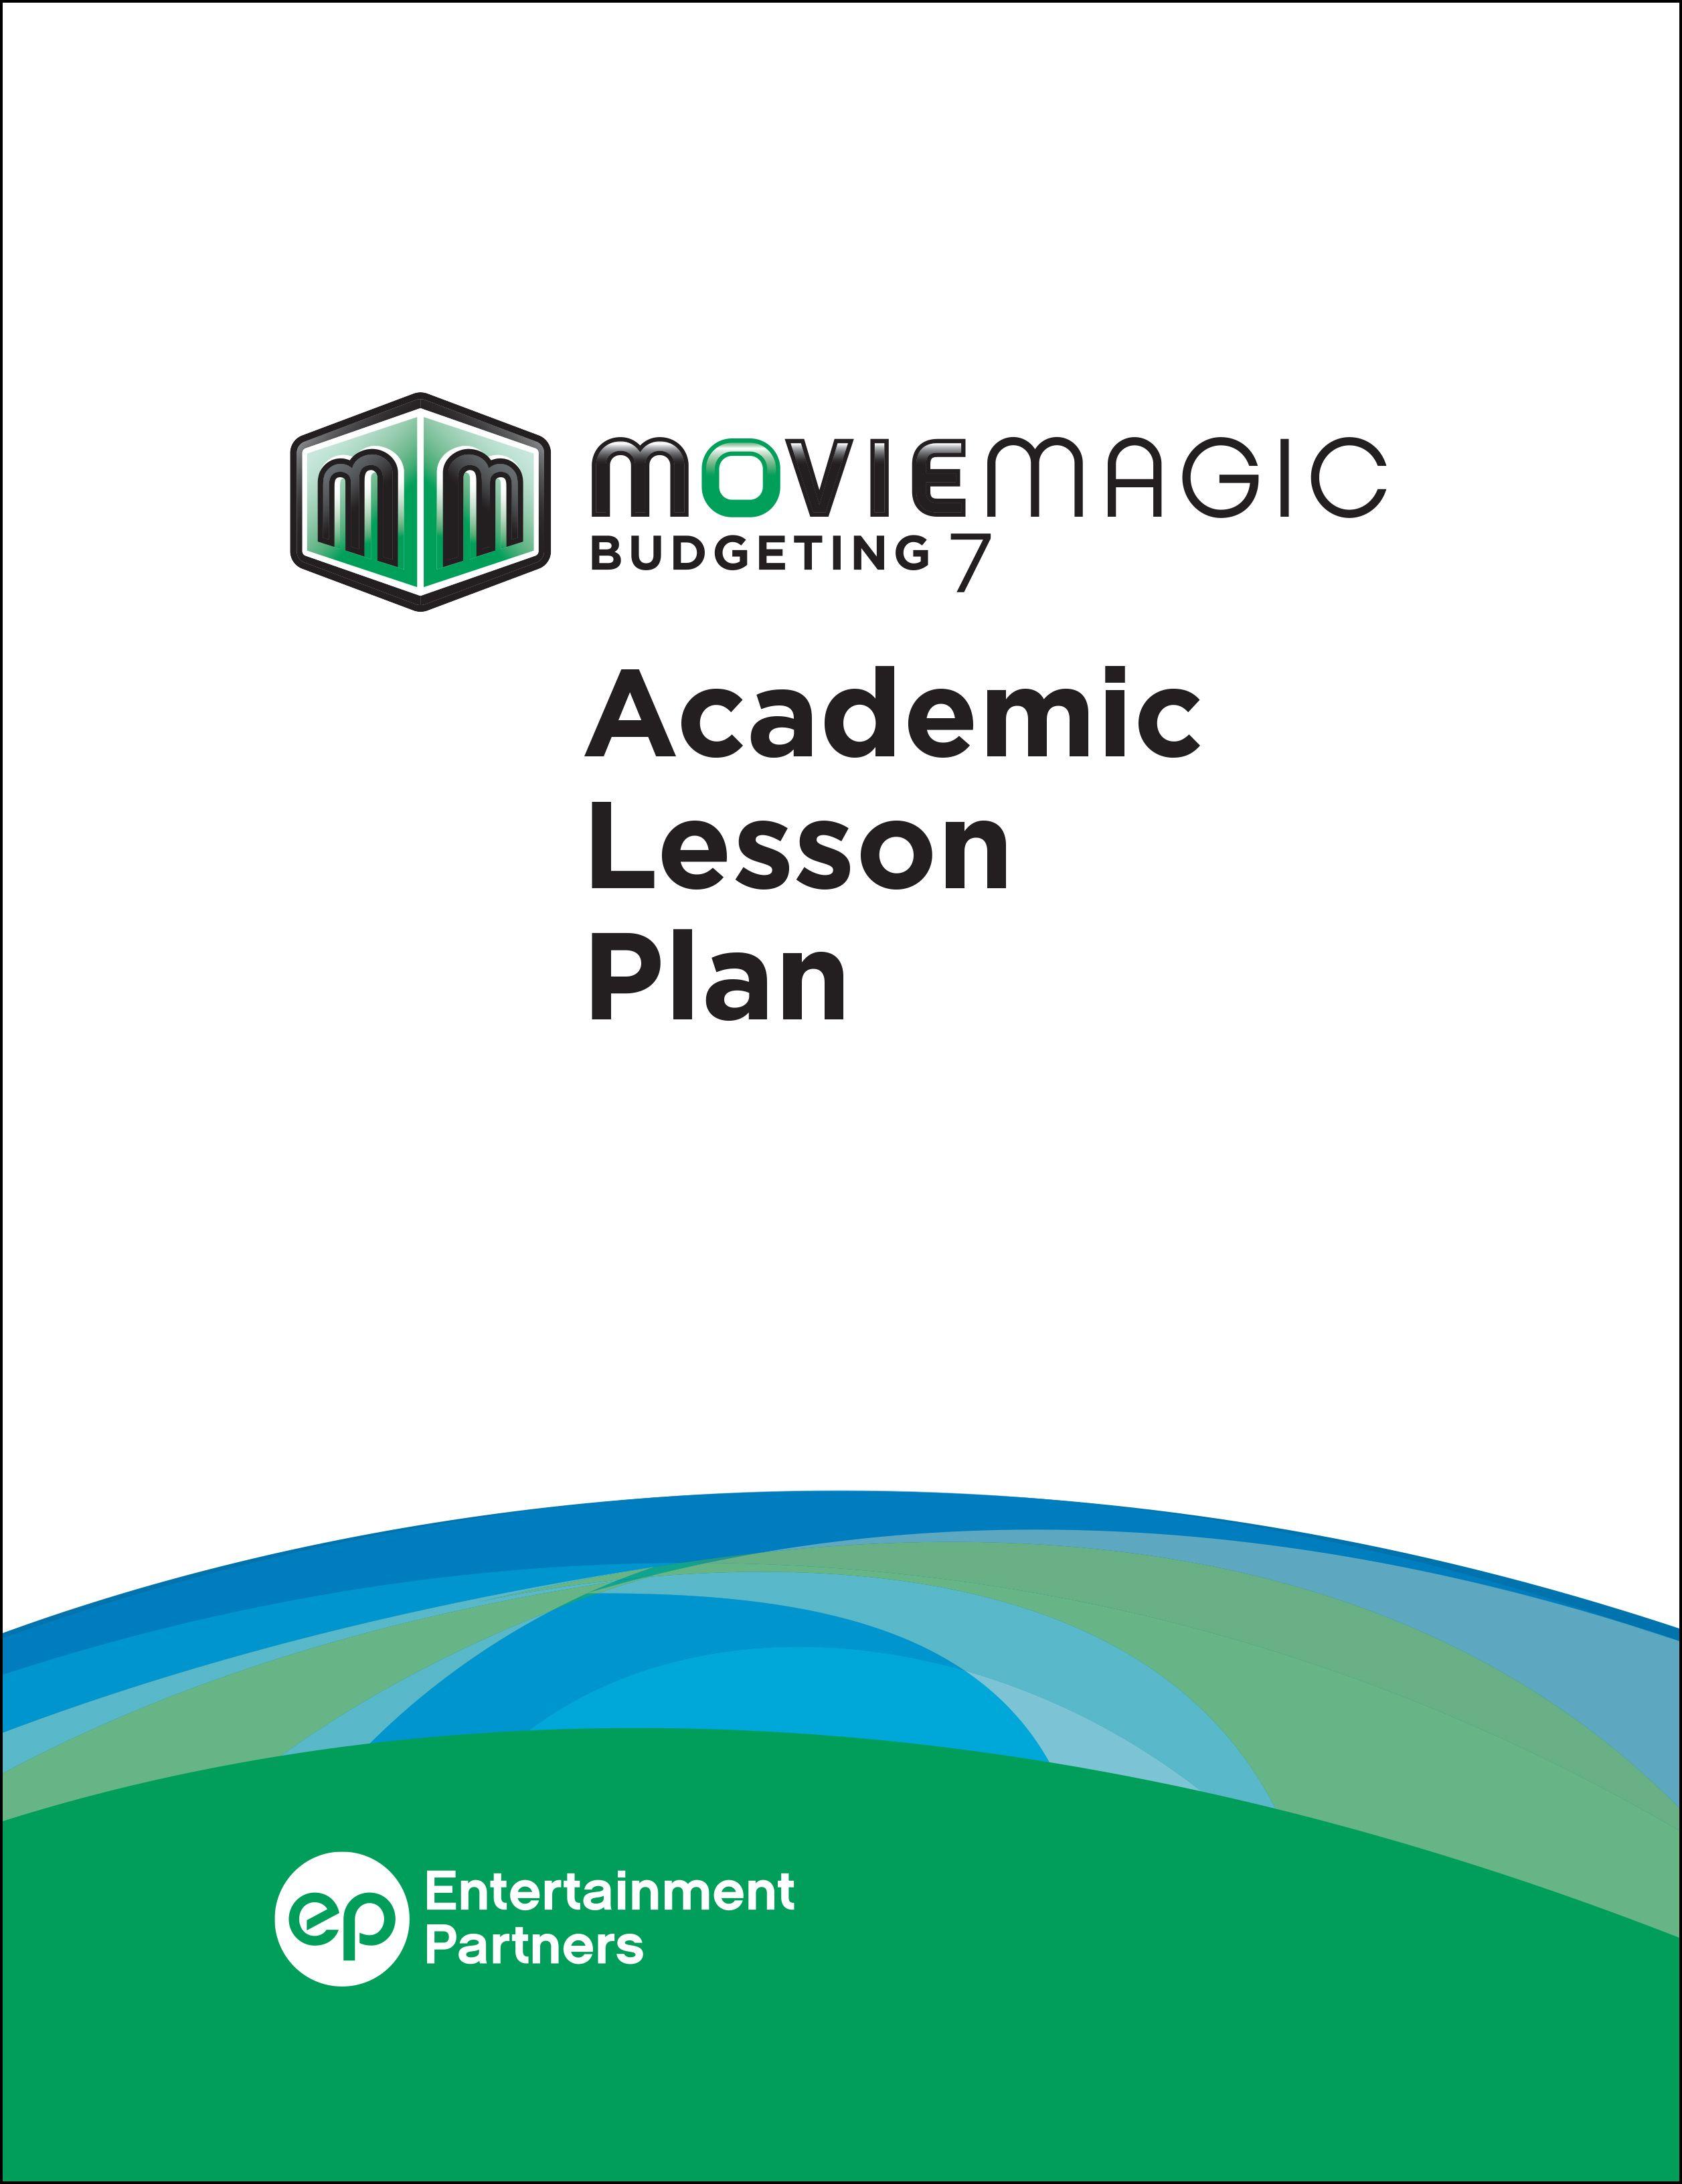 Entertainment Partners Logo - Movie Magic Budgeting Academic Lesson Plan - Downloadable PDF ...